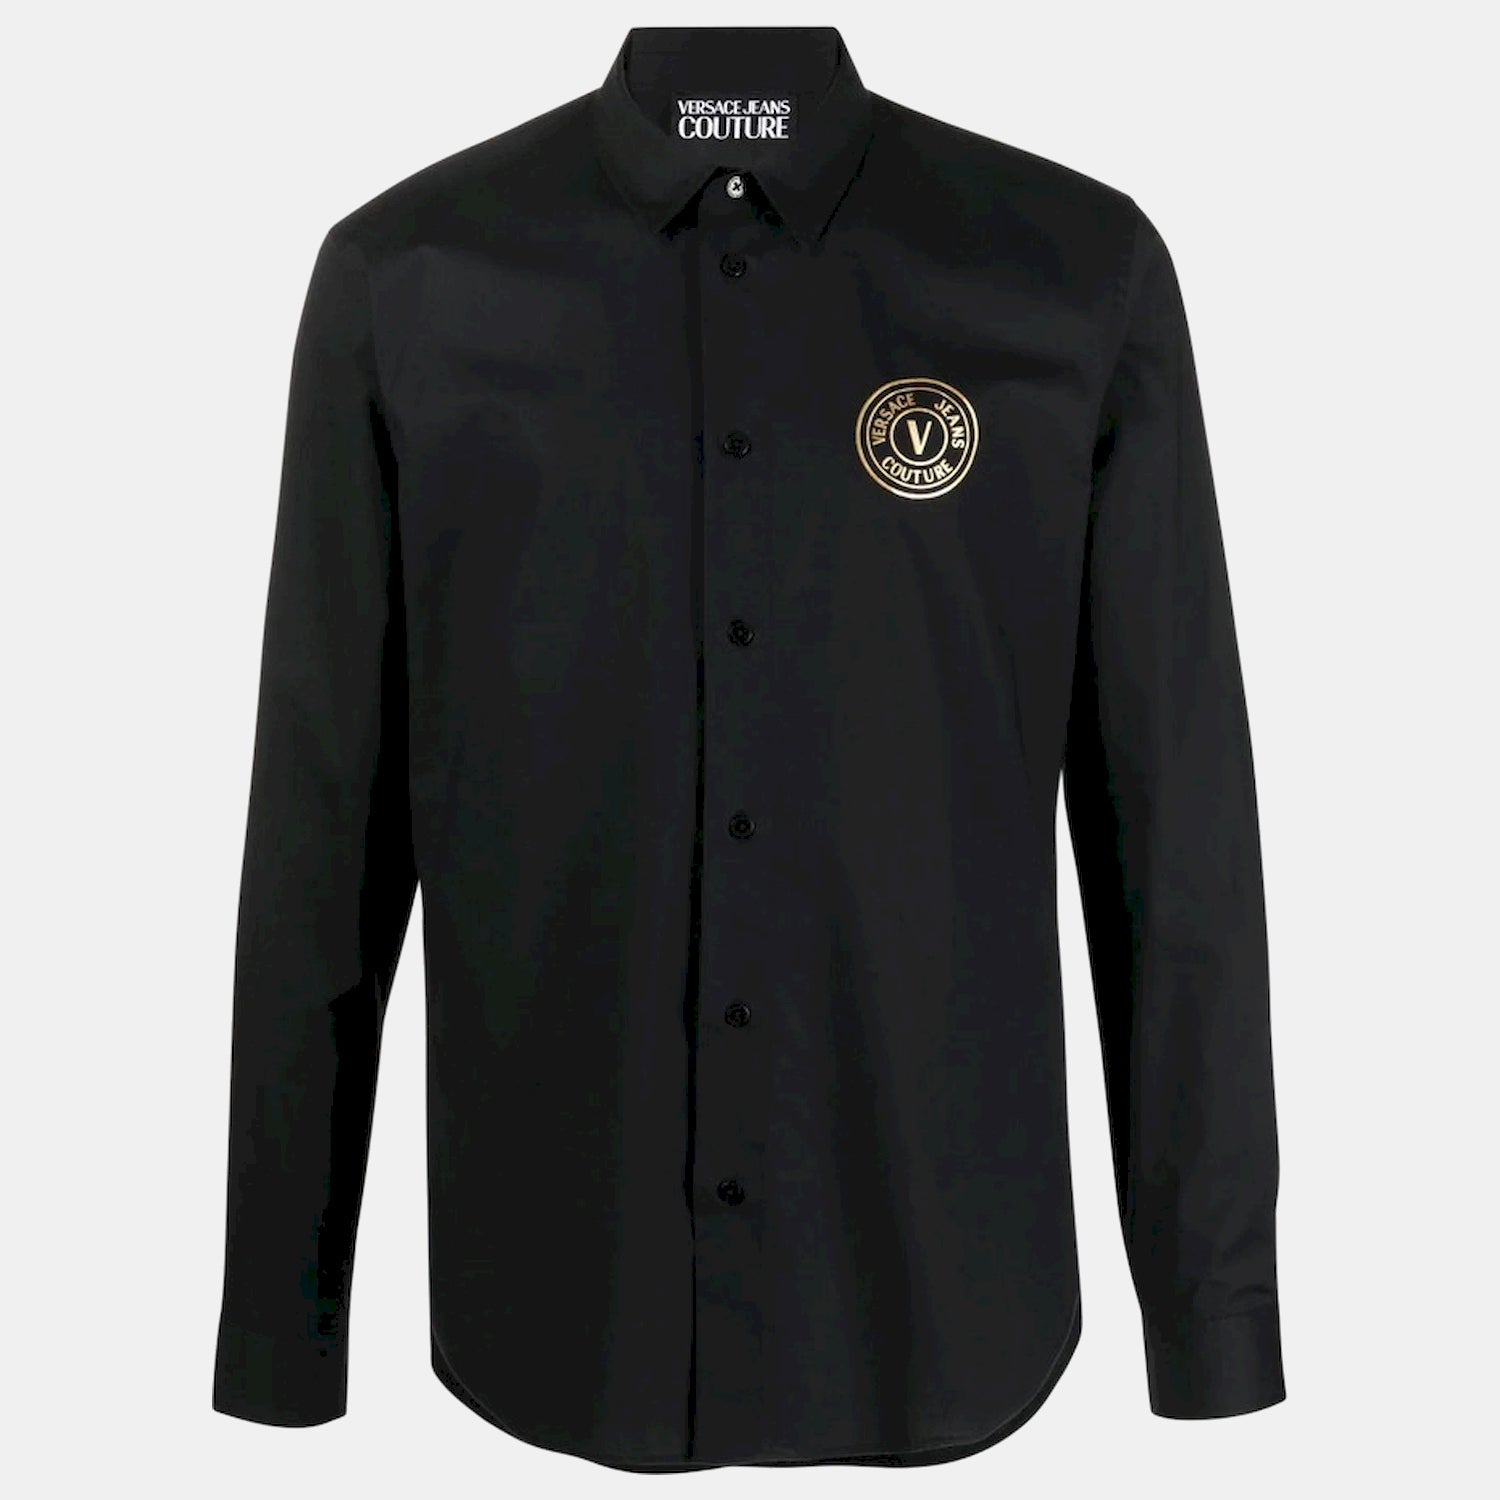 Versace Camisa  Shirt 74galys2 Blk Gold Preto Ouro_shot3